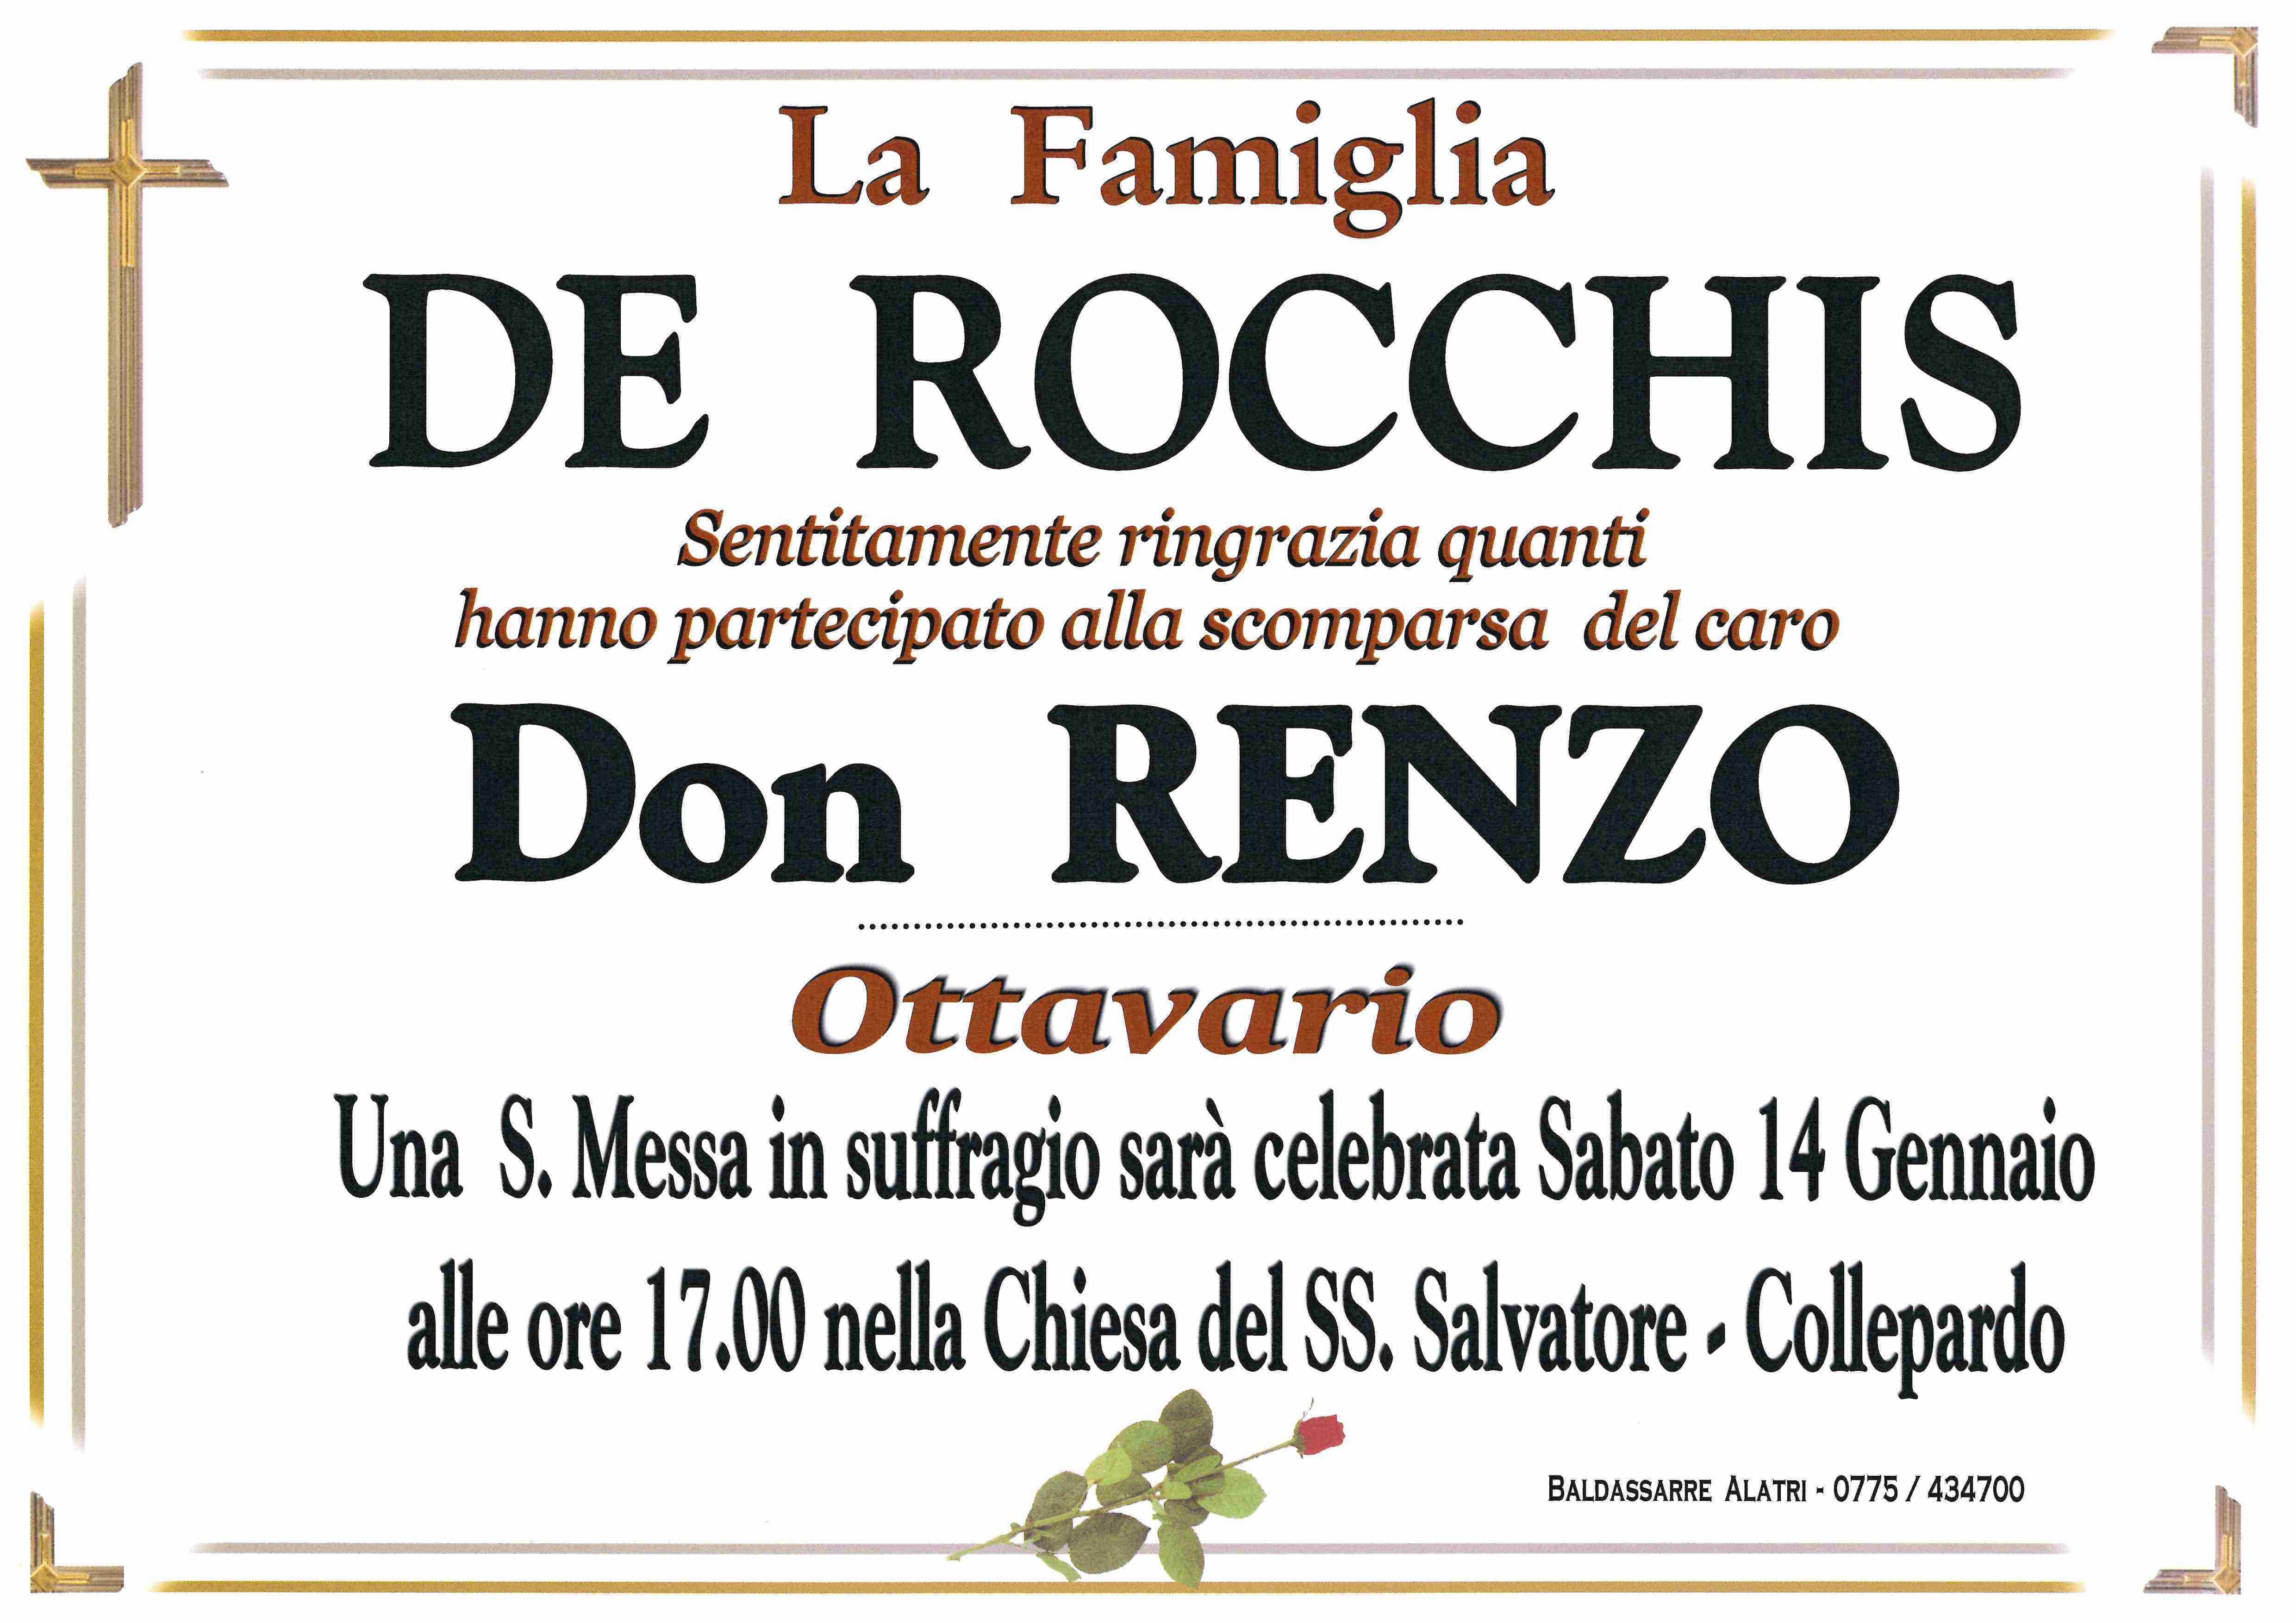 Renzo De Rocchis